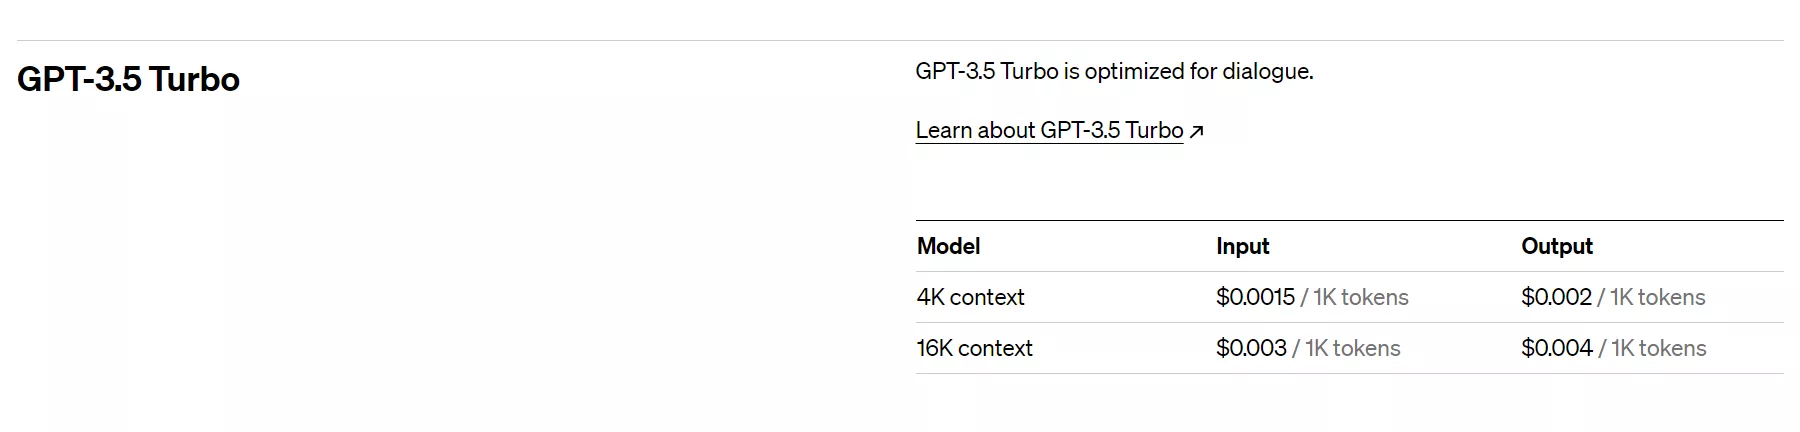 gpt-3.5-turbo